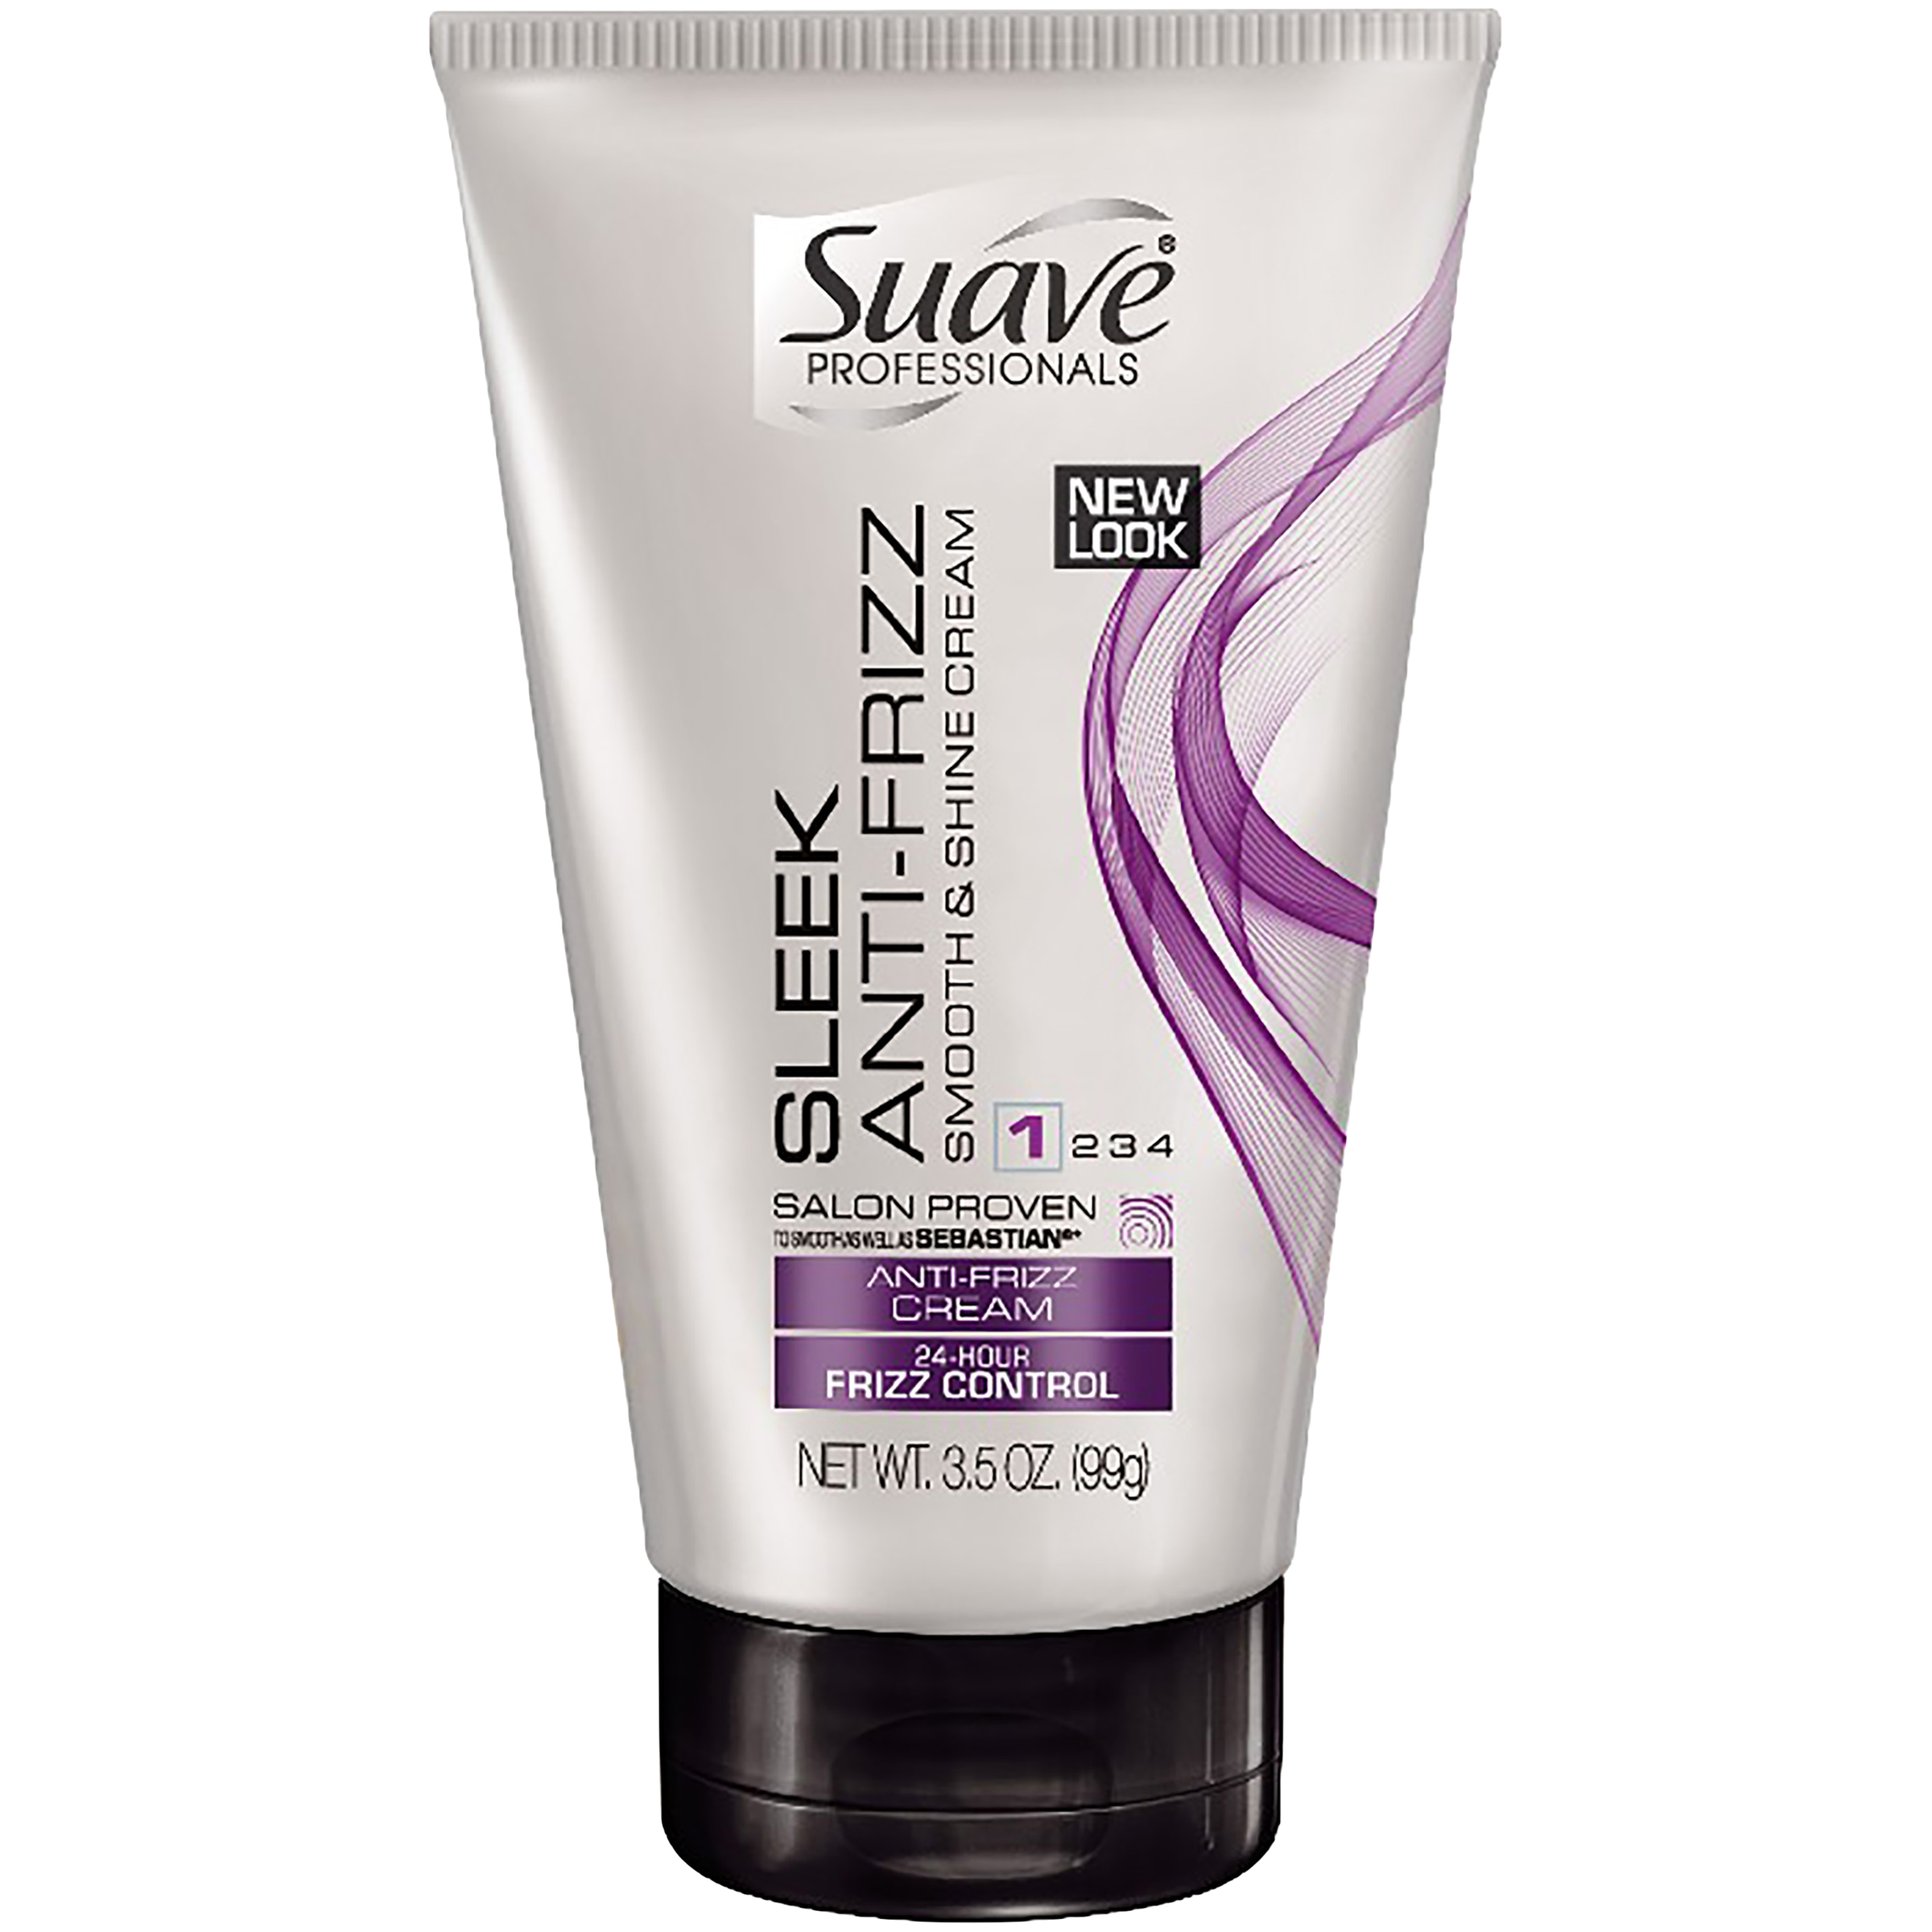 Suave Professionals Anti-Frizz Cream, Sleek 3.5 oz (99 g)